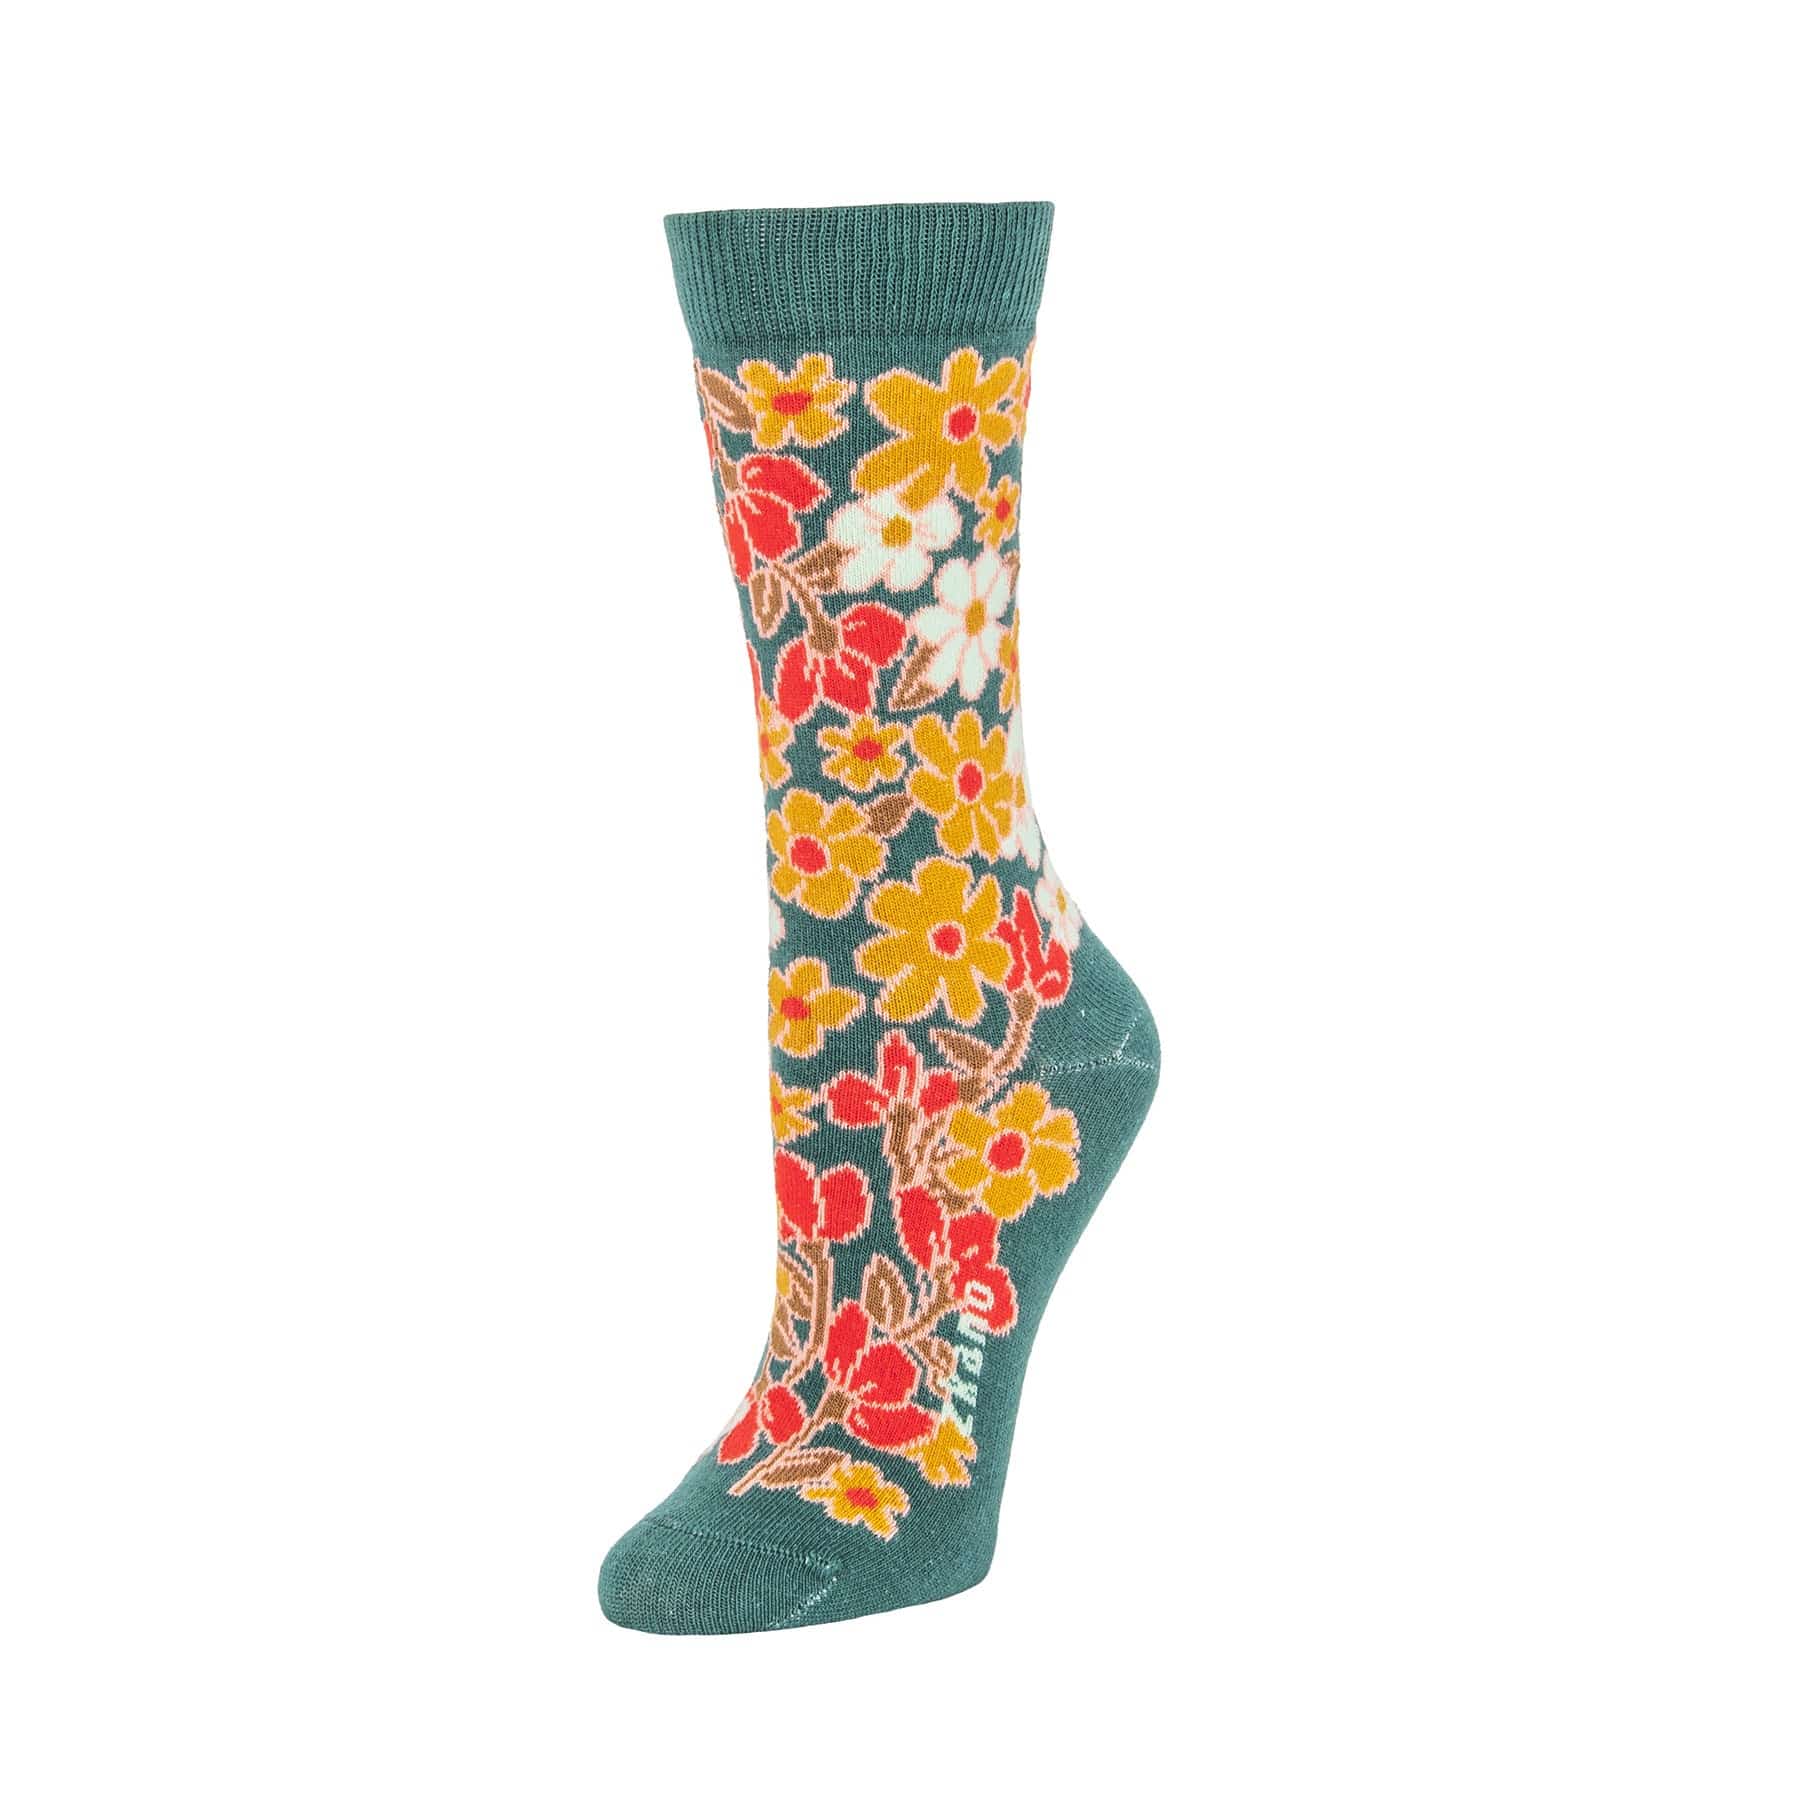 Wildflowers - Organic Cotton Crew Socks - Harvest Gold – zkano socks